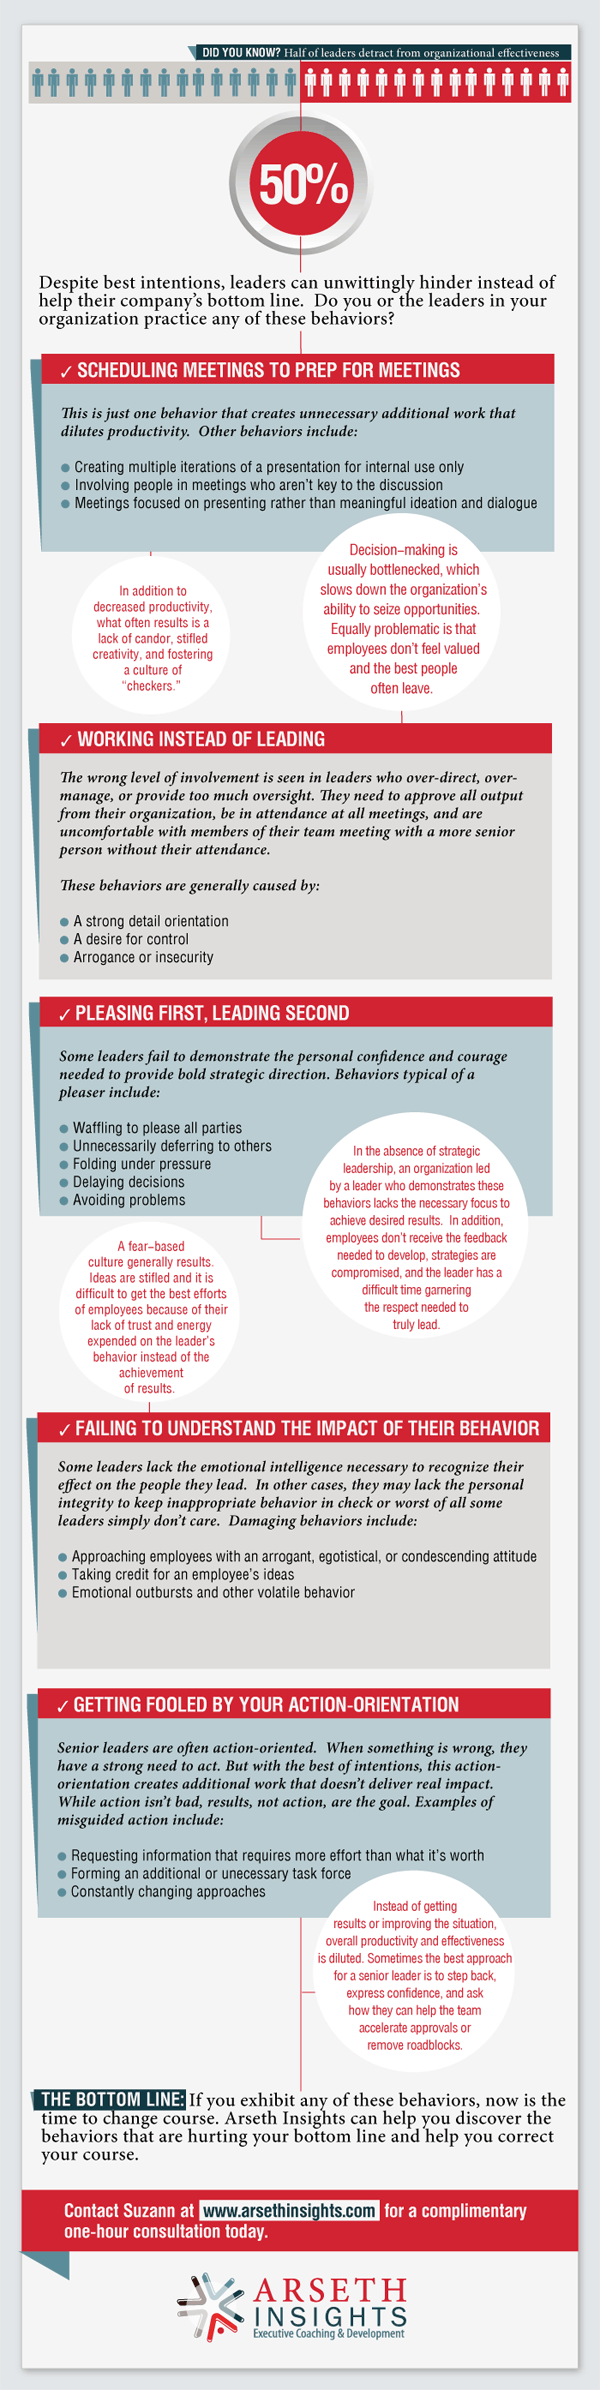 Infographic: Five Leadership Behaviors that Impair Results